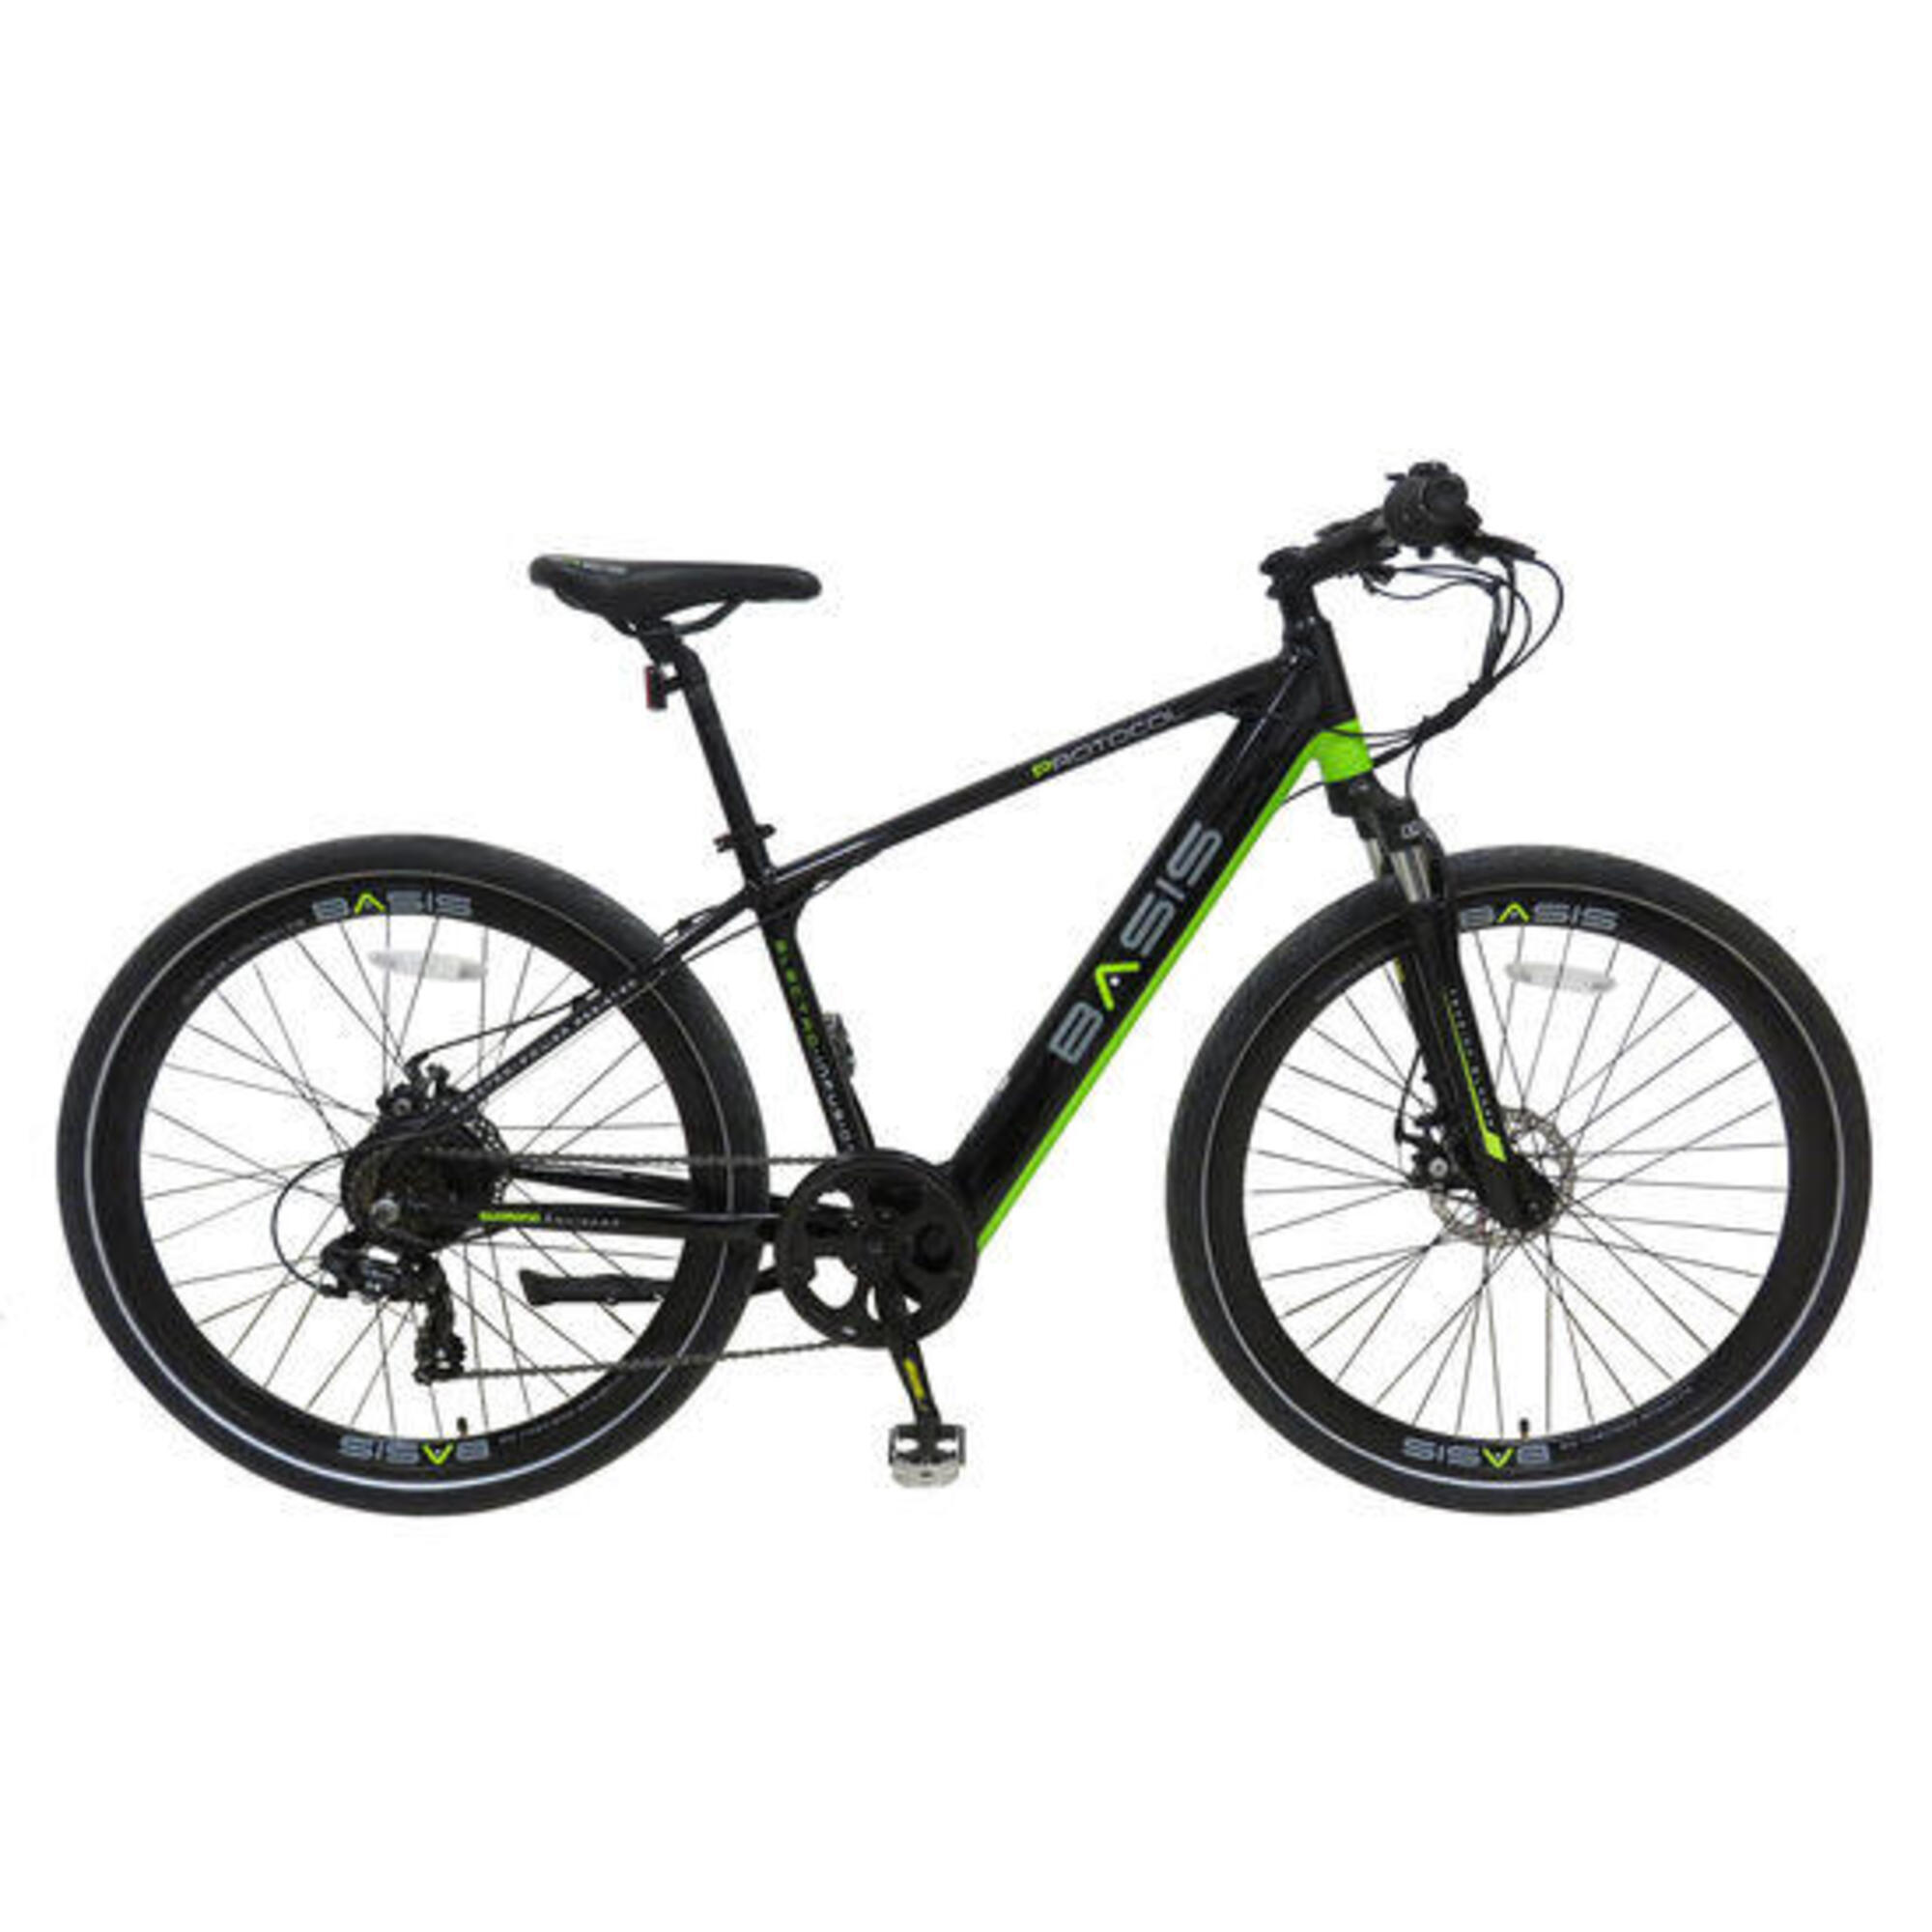 Basis Protocol Hybrid Electric Bike, 7Ah, 700c Wheel - Black/Green 1/6